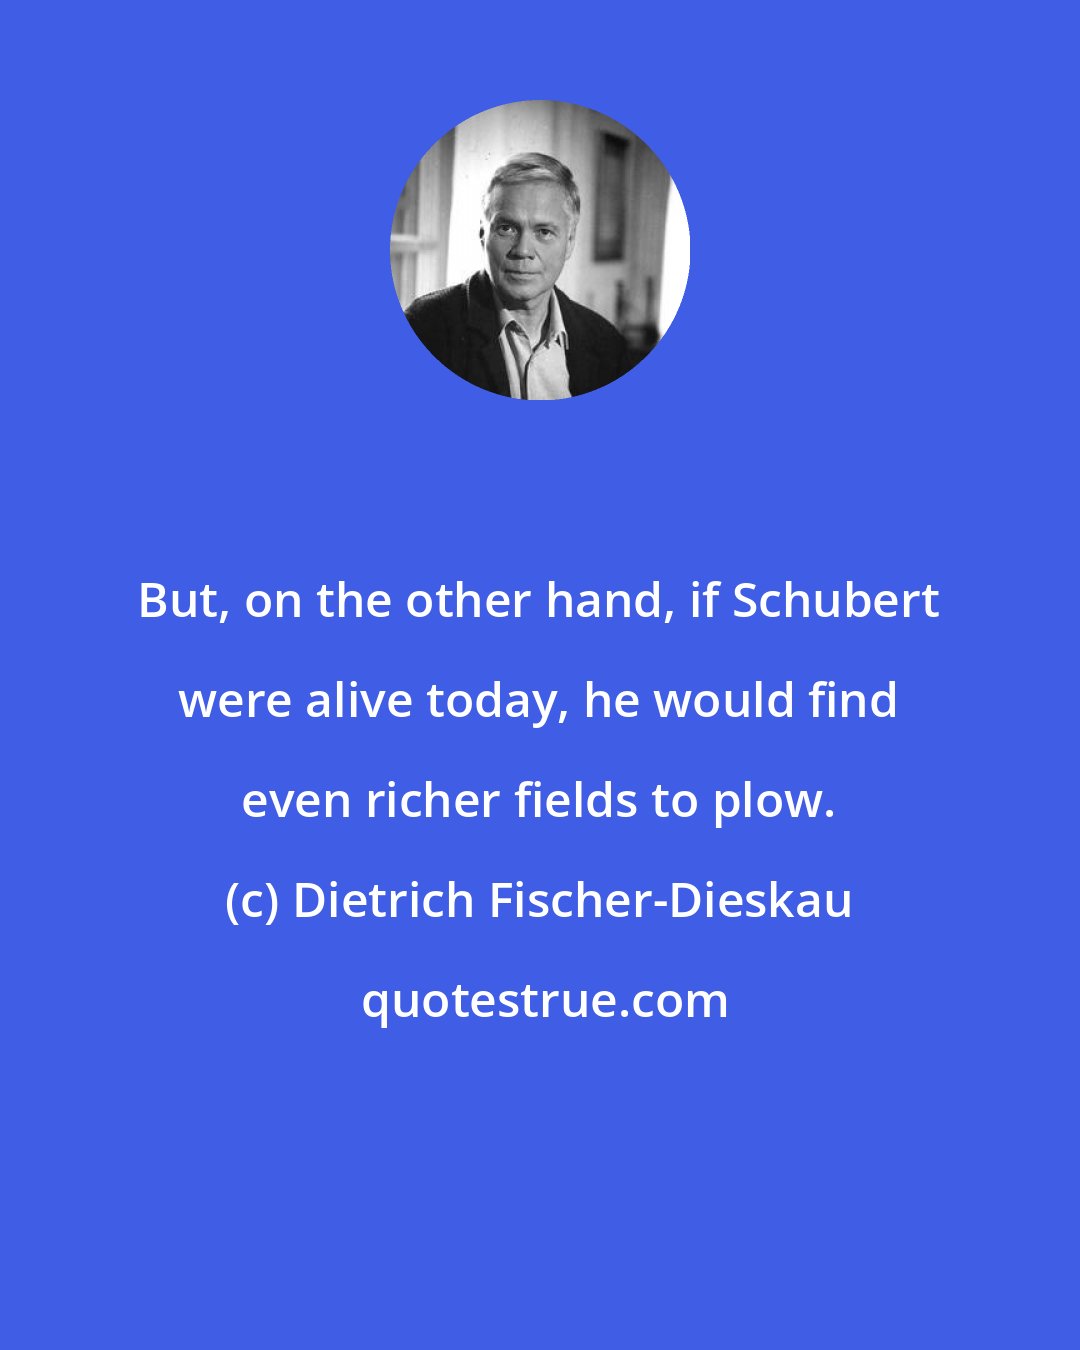 Dietrich Fischer-Dieskau: But, on the other hand, if Schubert were alive today, he would find even richer fields to plow.